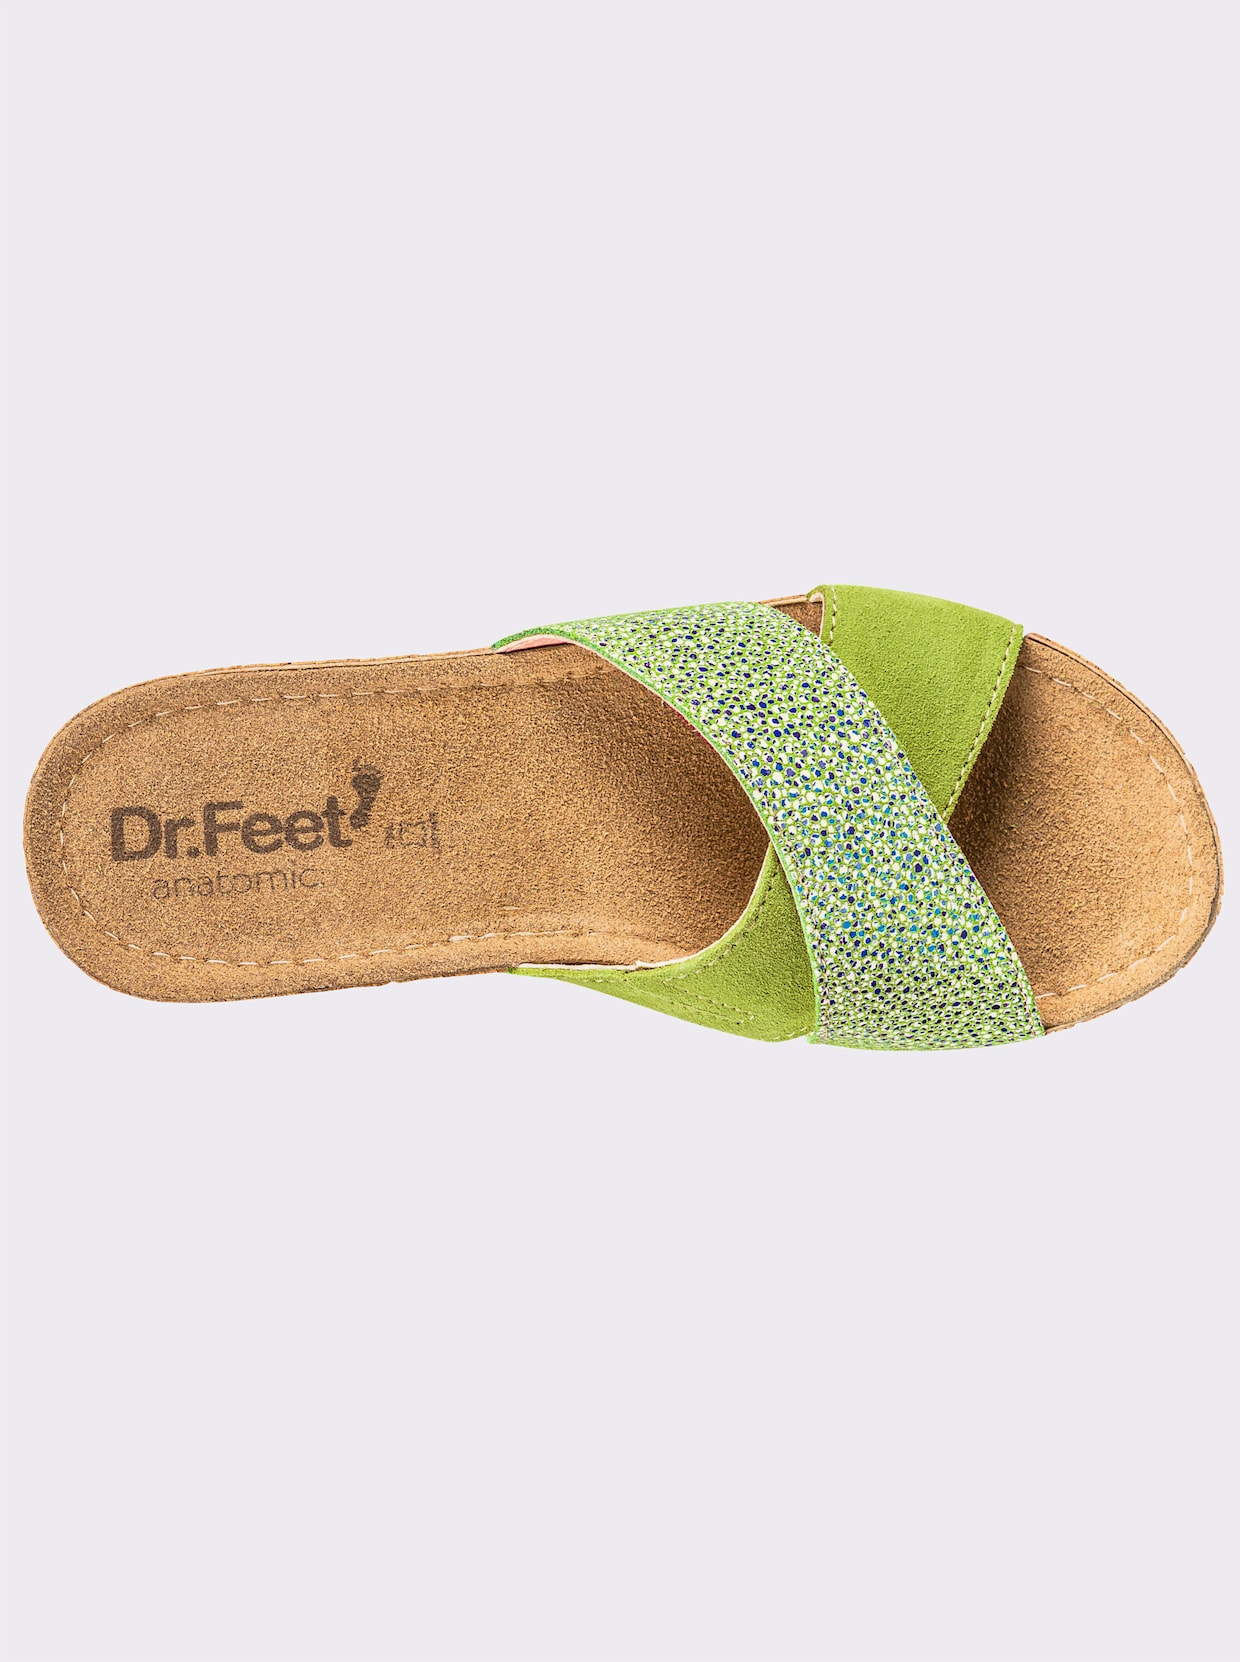 Dr. Feet Slippers - groen